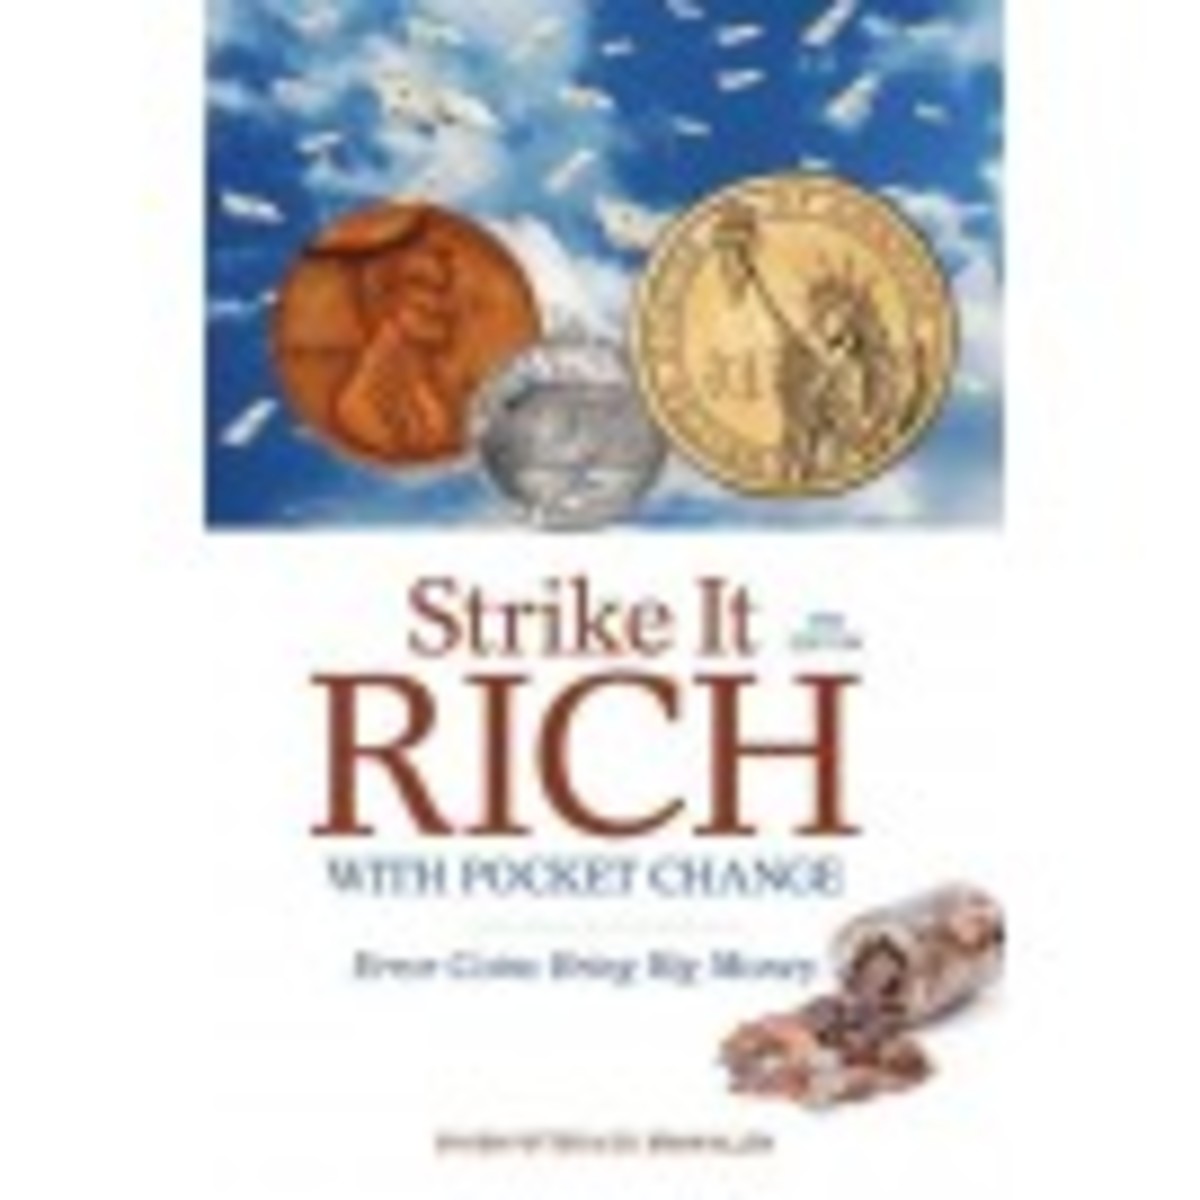 Strike It Rich with Pocket Change